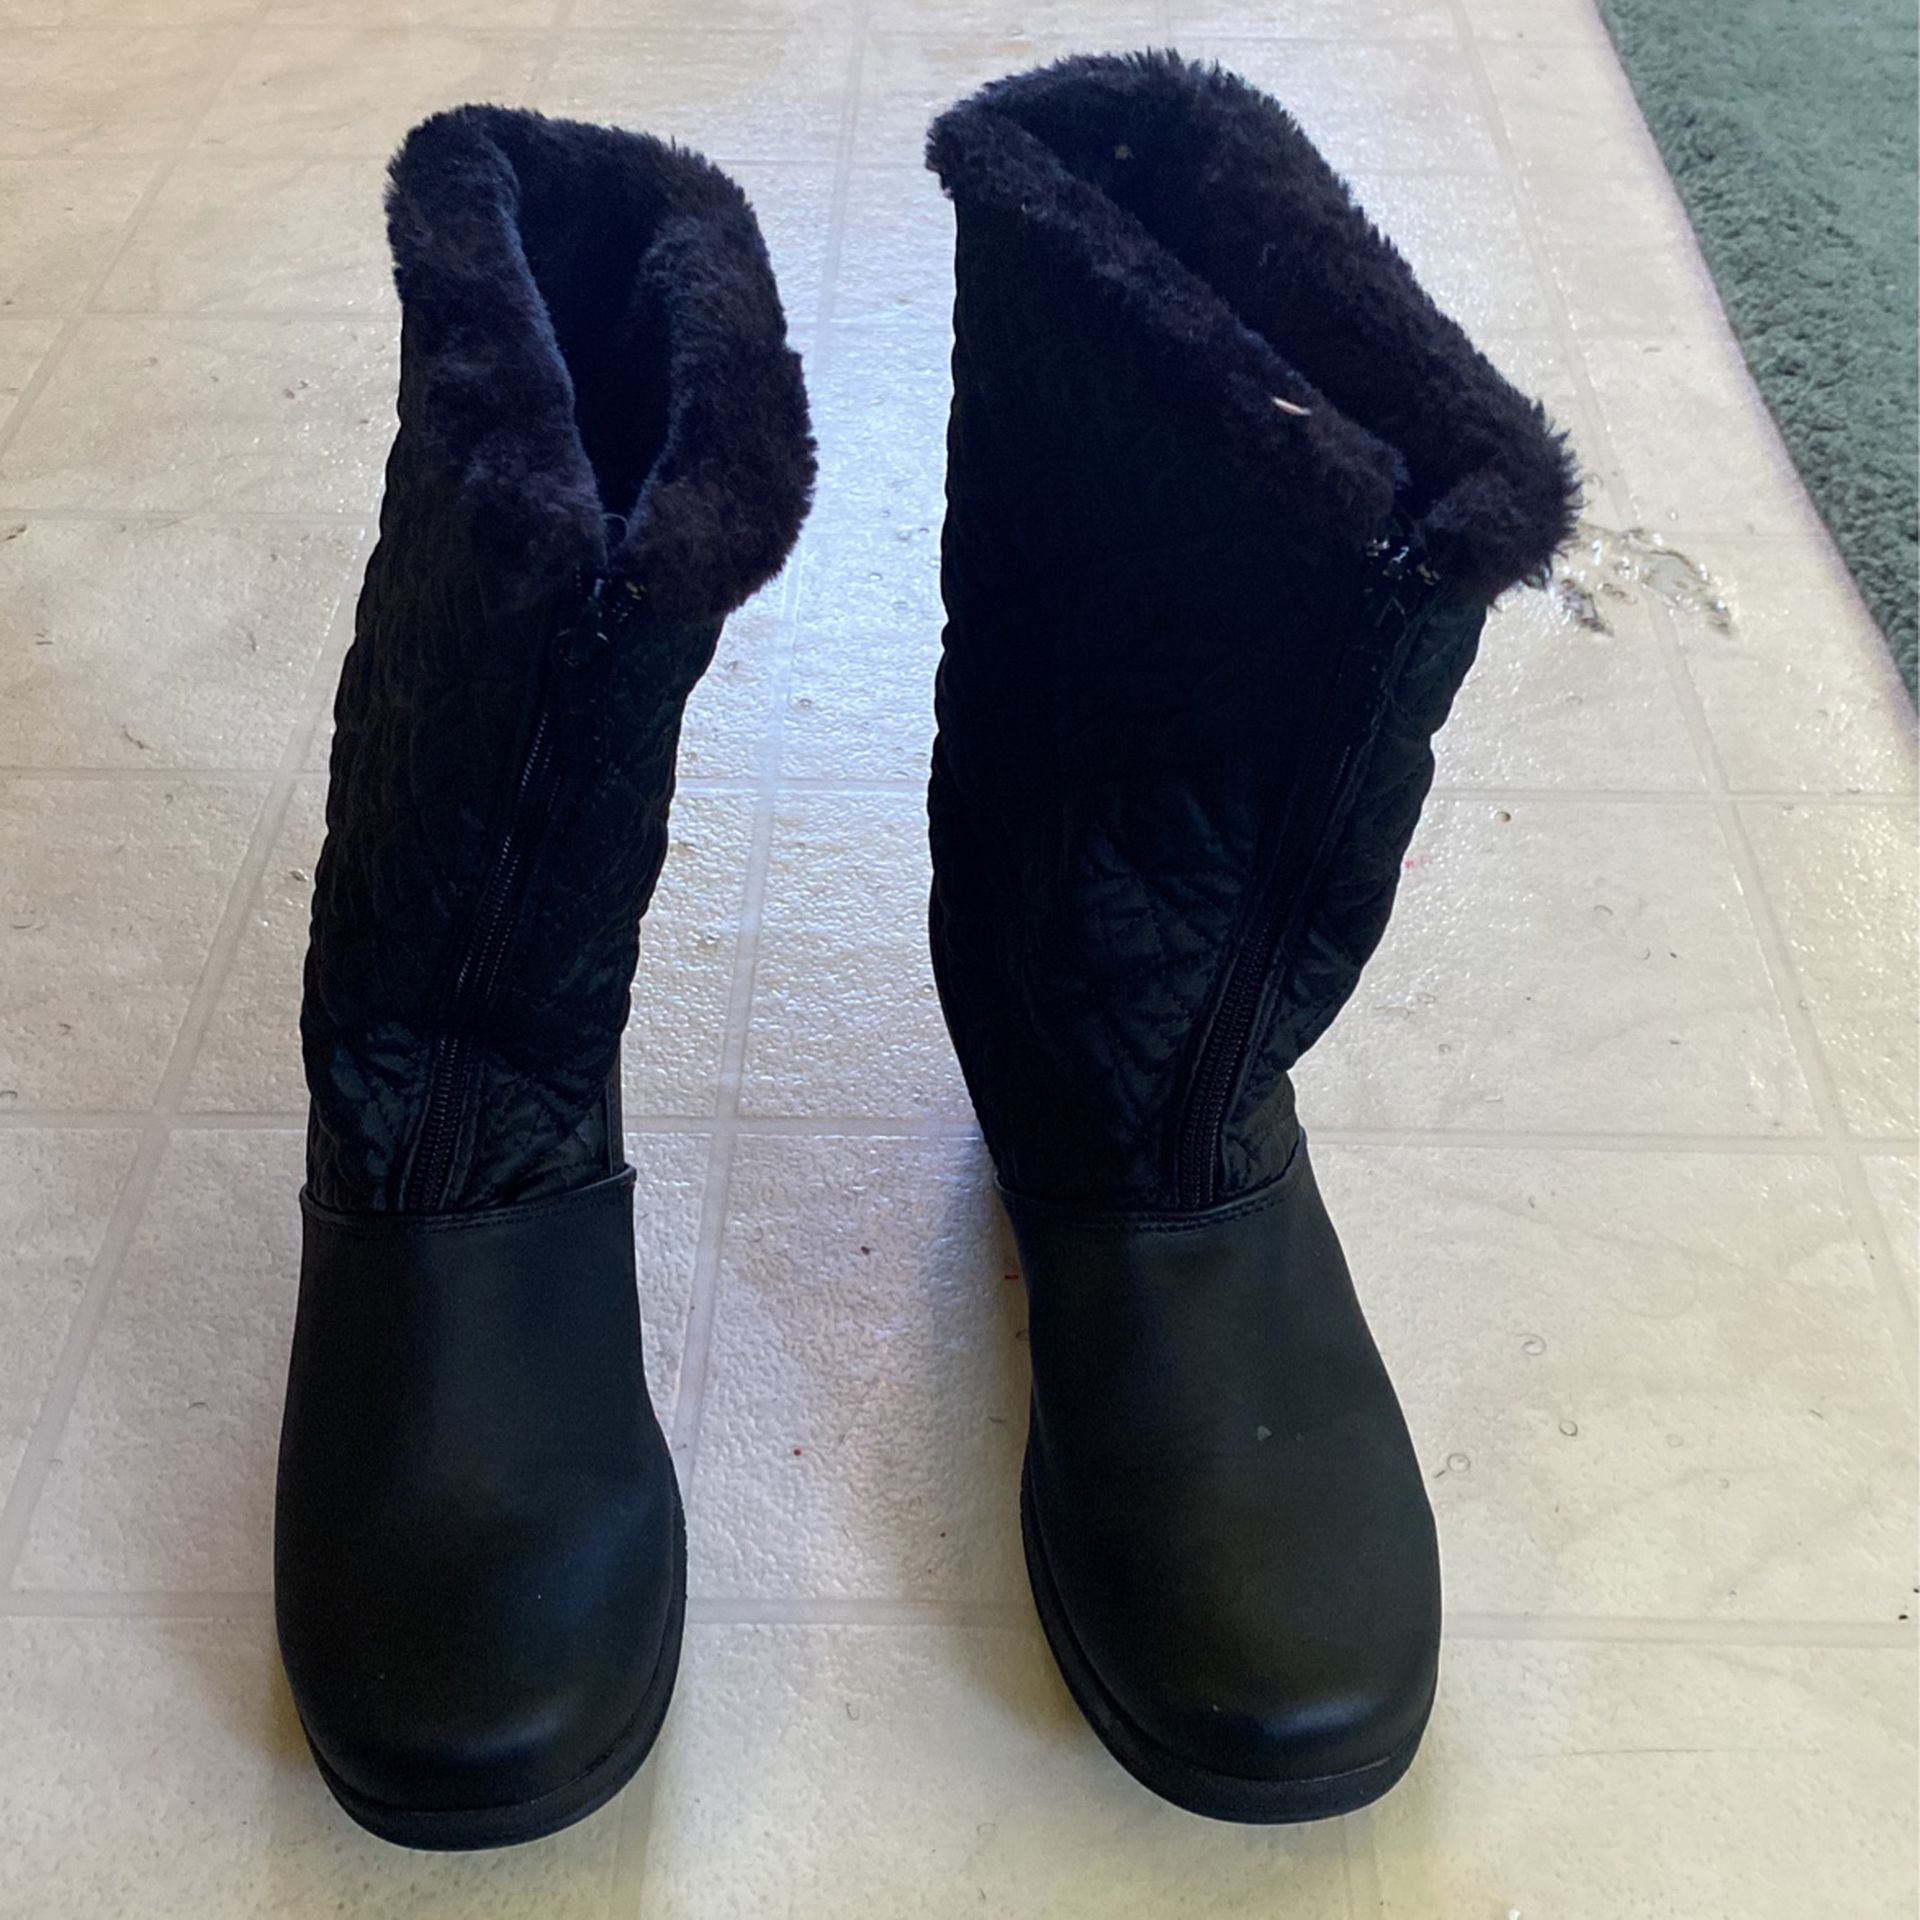 Size 8 Black Boots